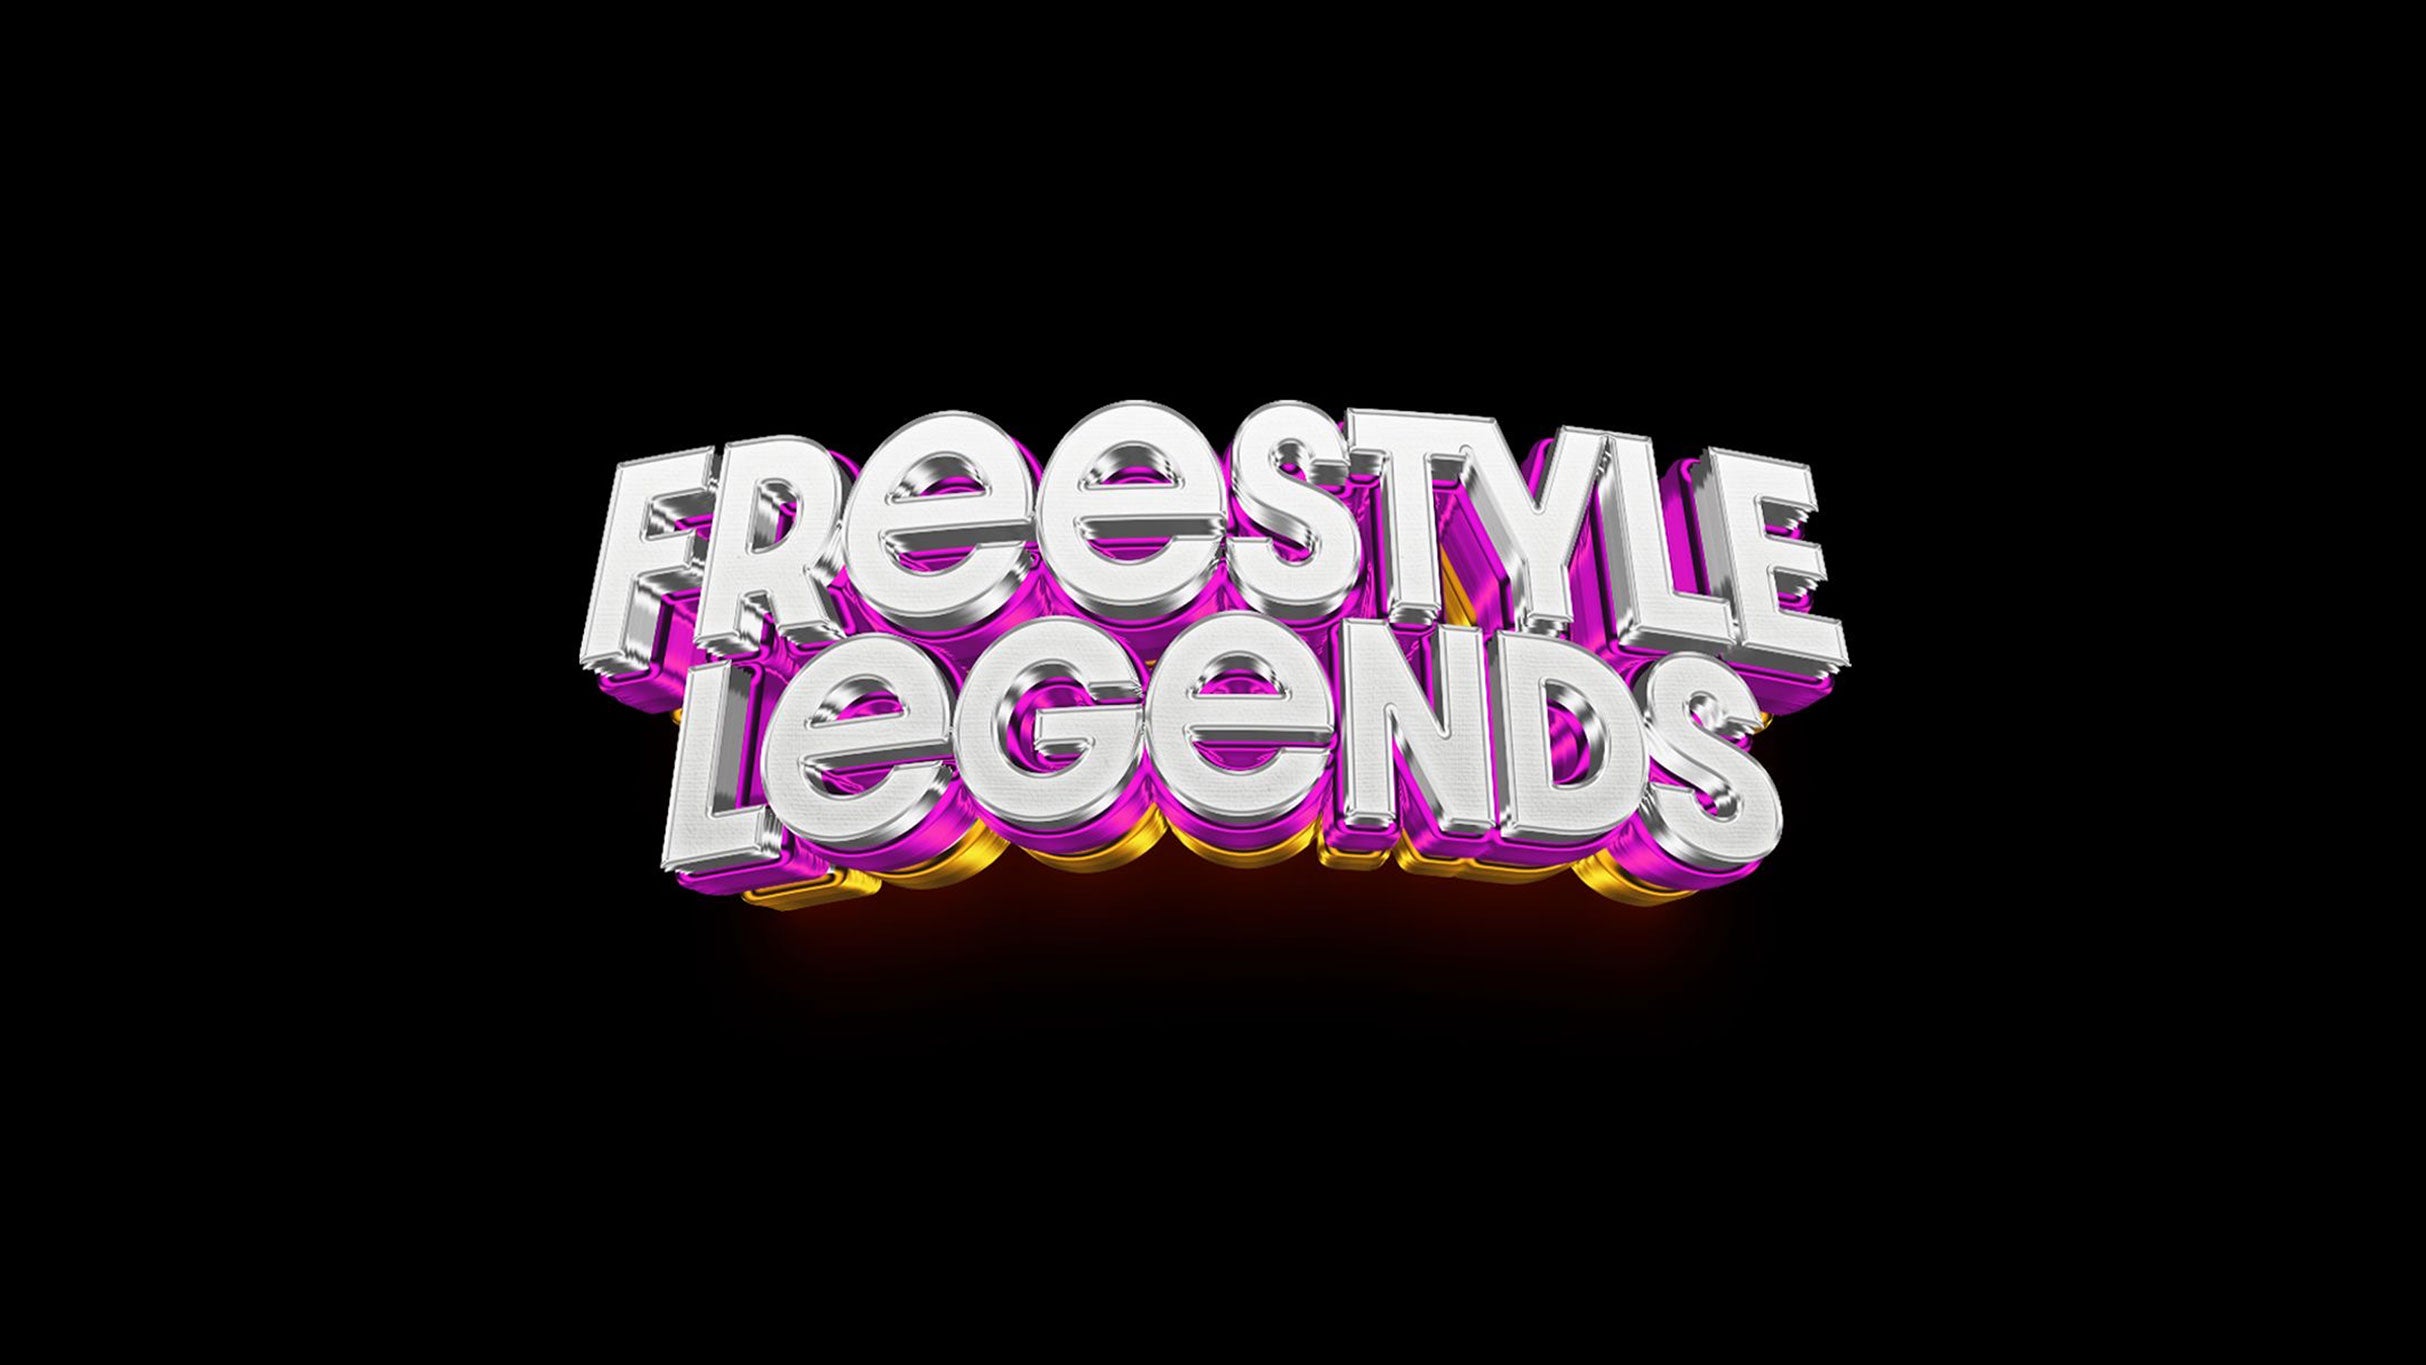 Freestyle Legends Reunion at VyStar Veterans Memorial Arena